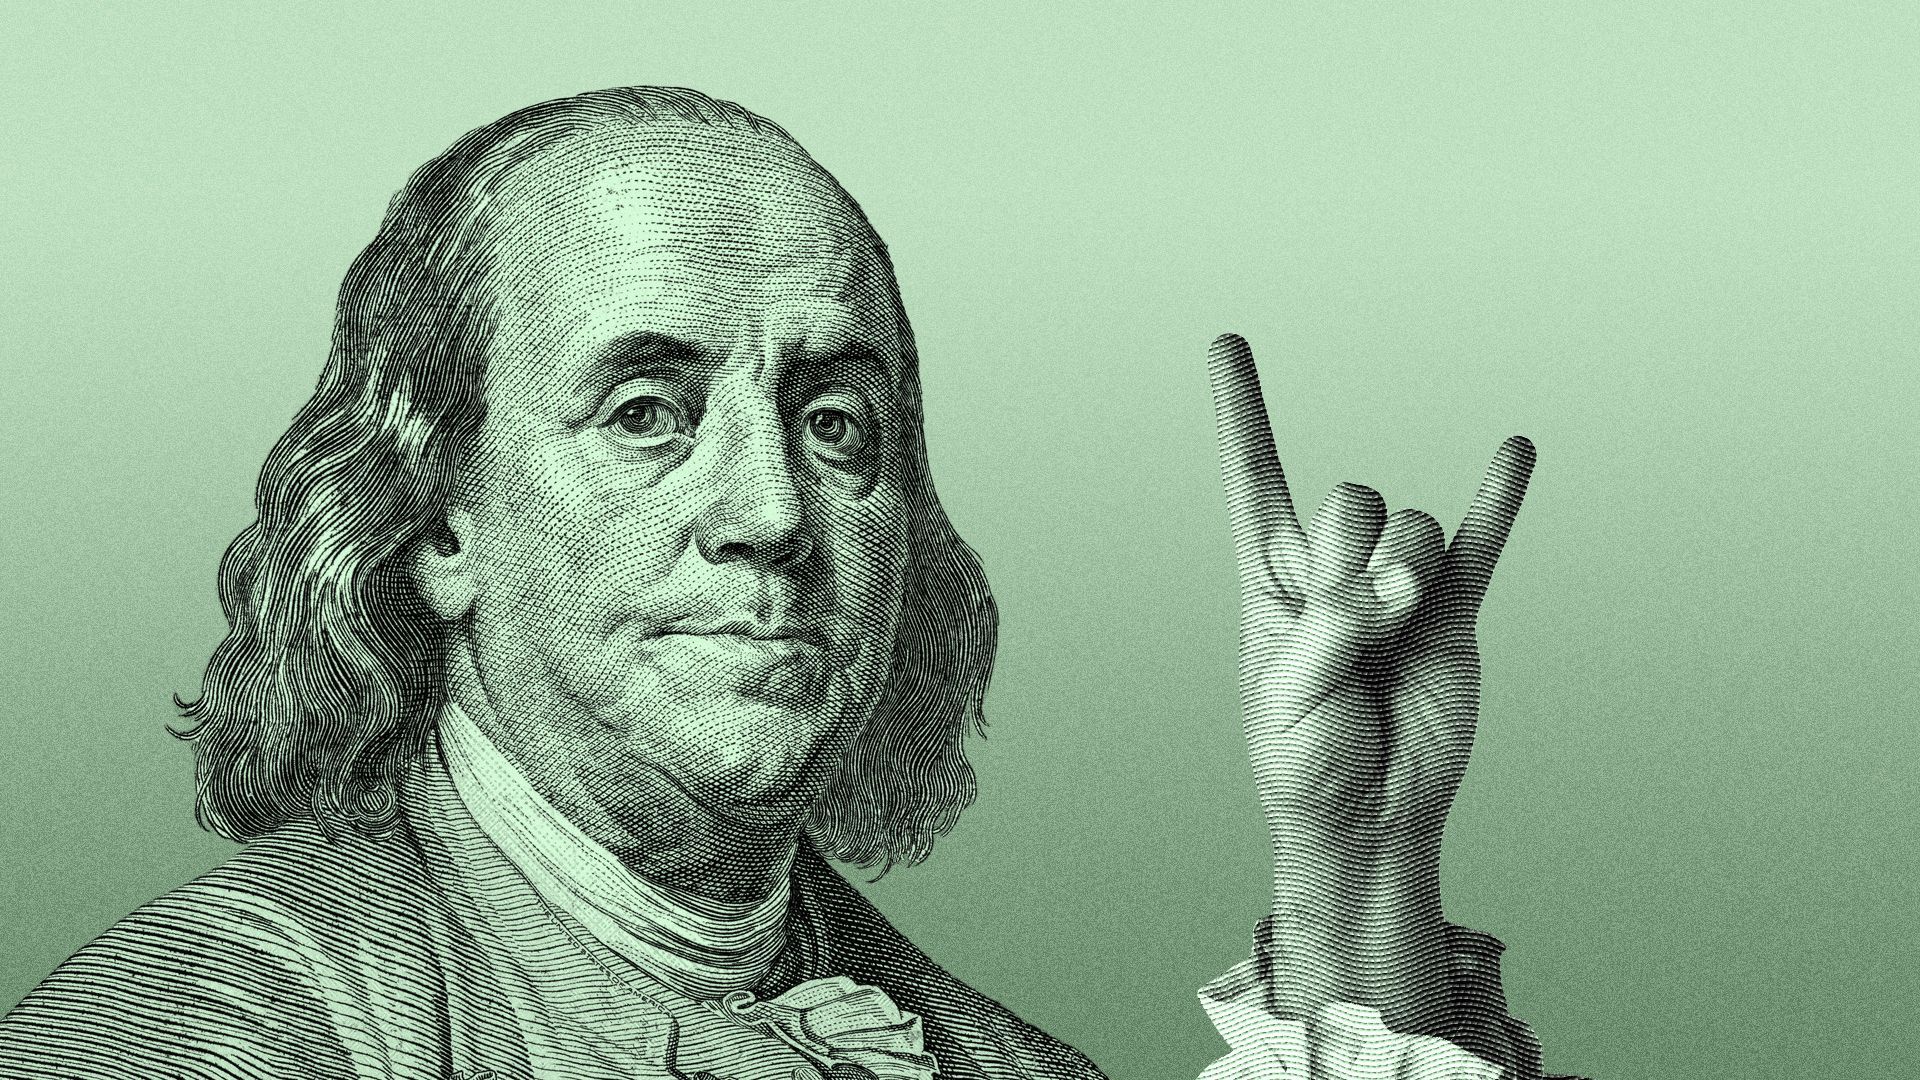 Illustration of Ben Franklin making the hardcore hand symbol. 